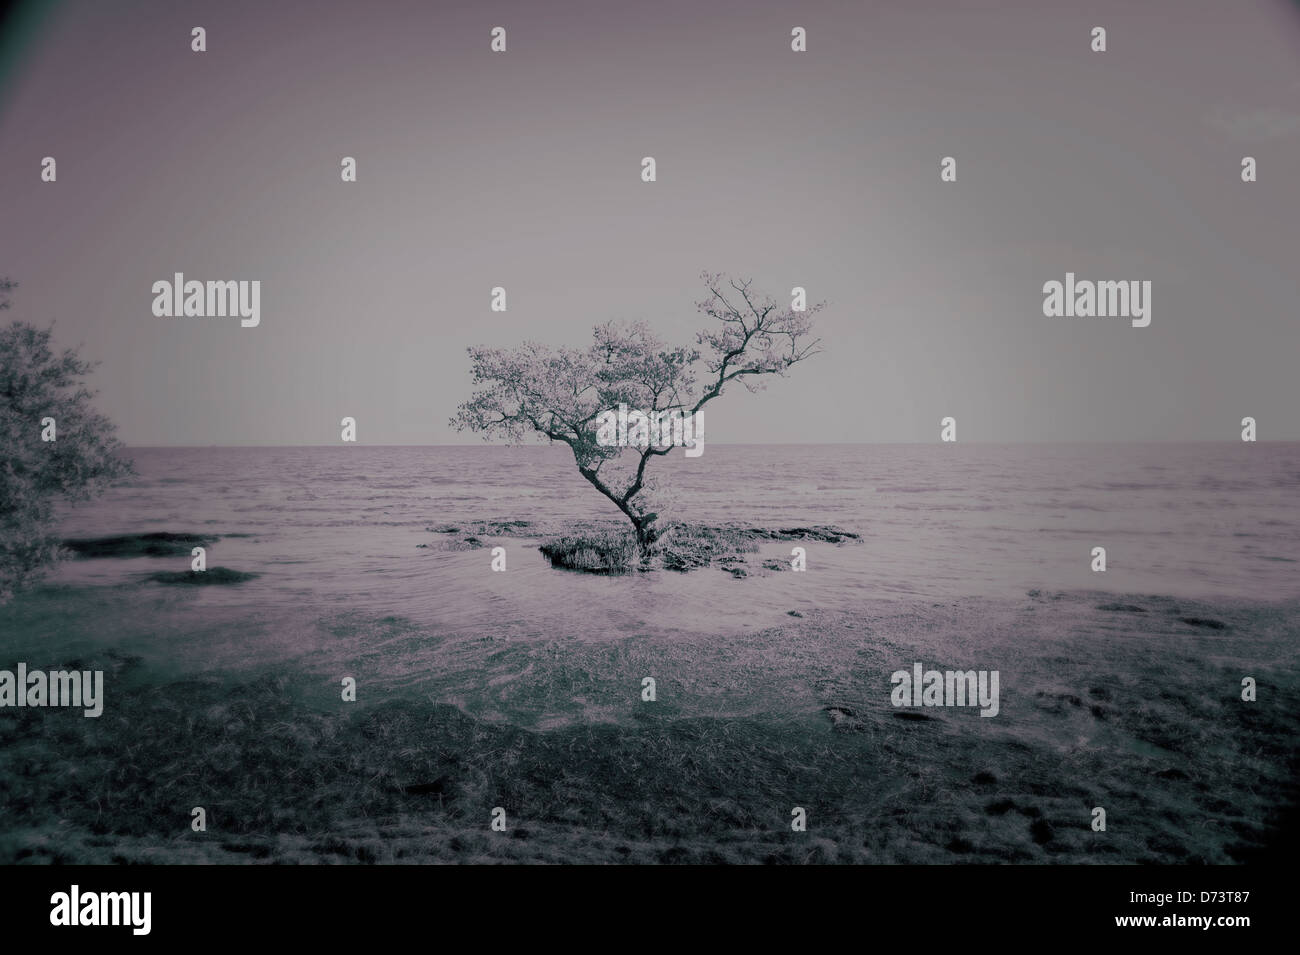 A tree at a desolated beach Stock Photo